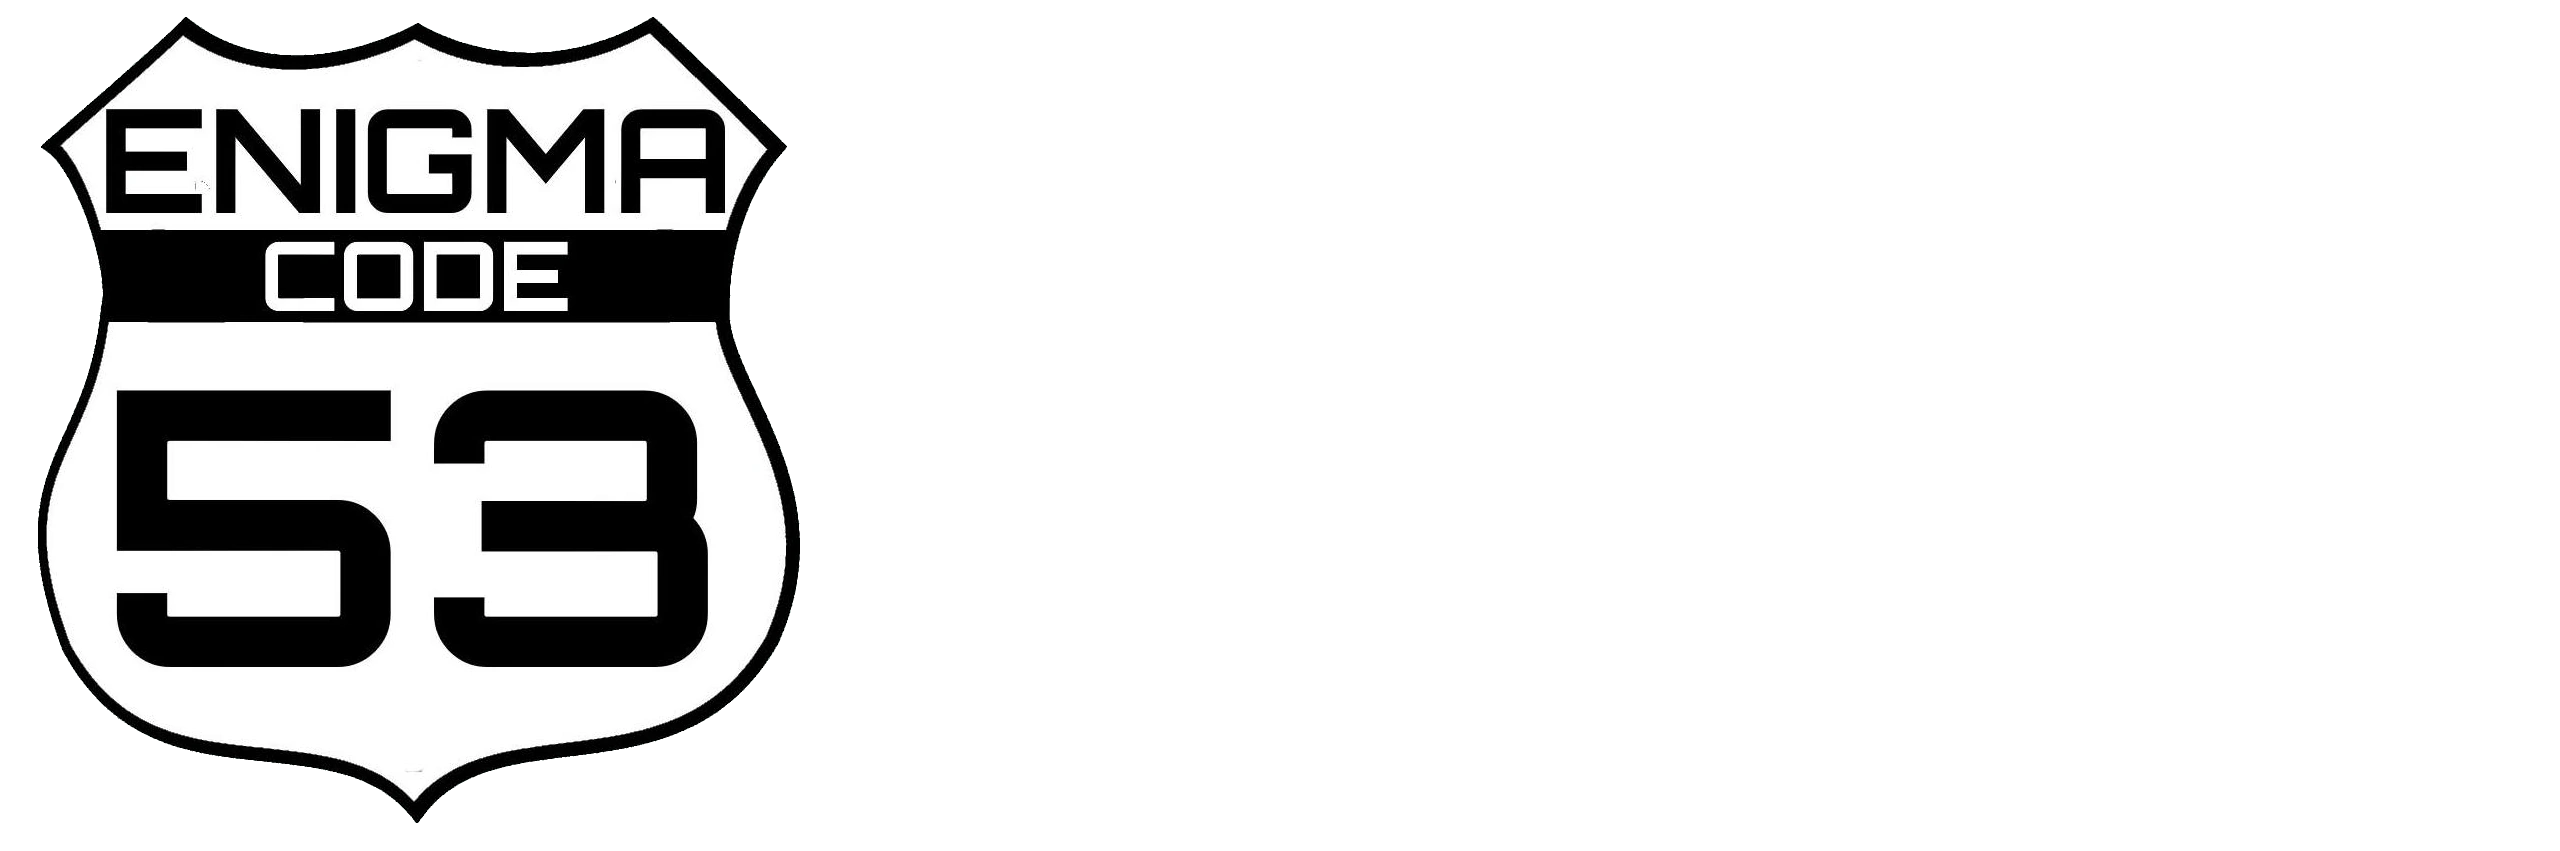 EnigmaCODE 53 Logo